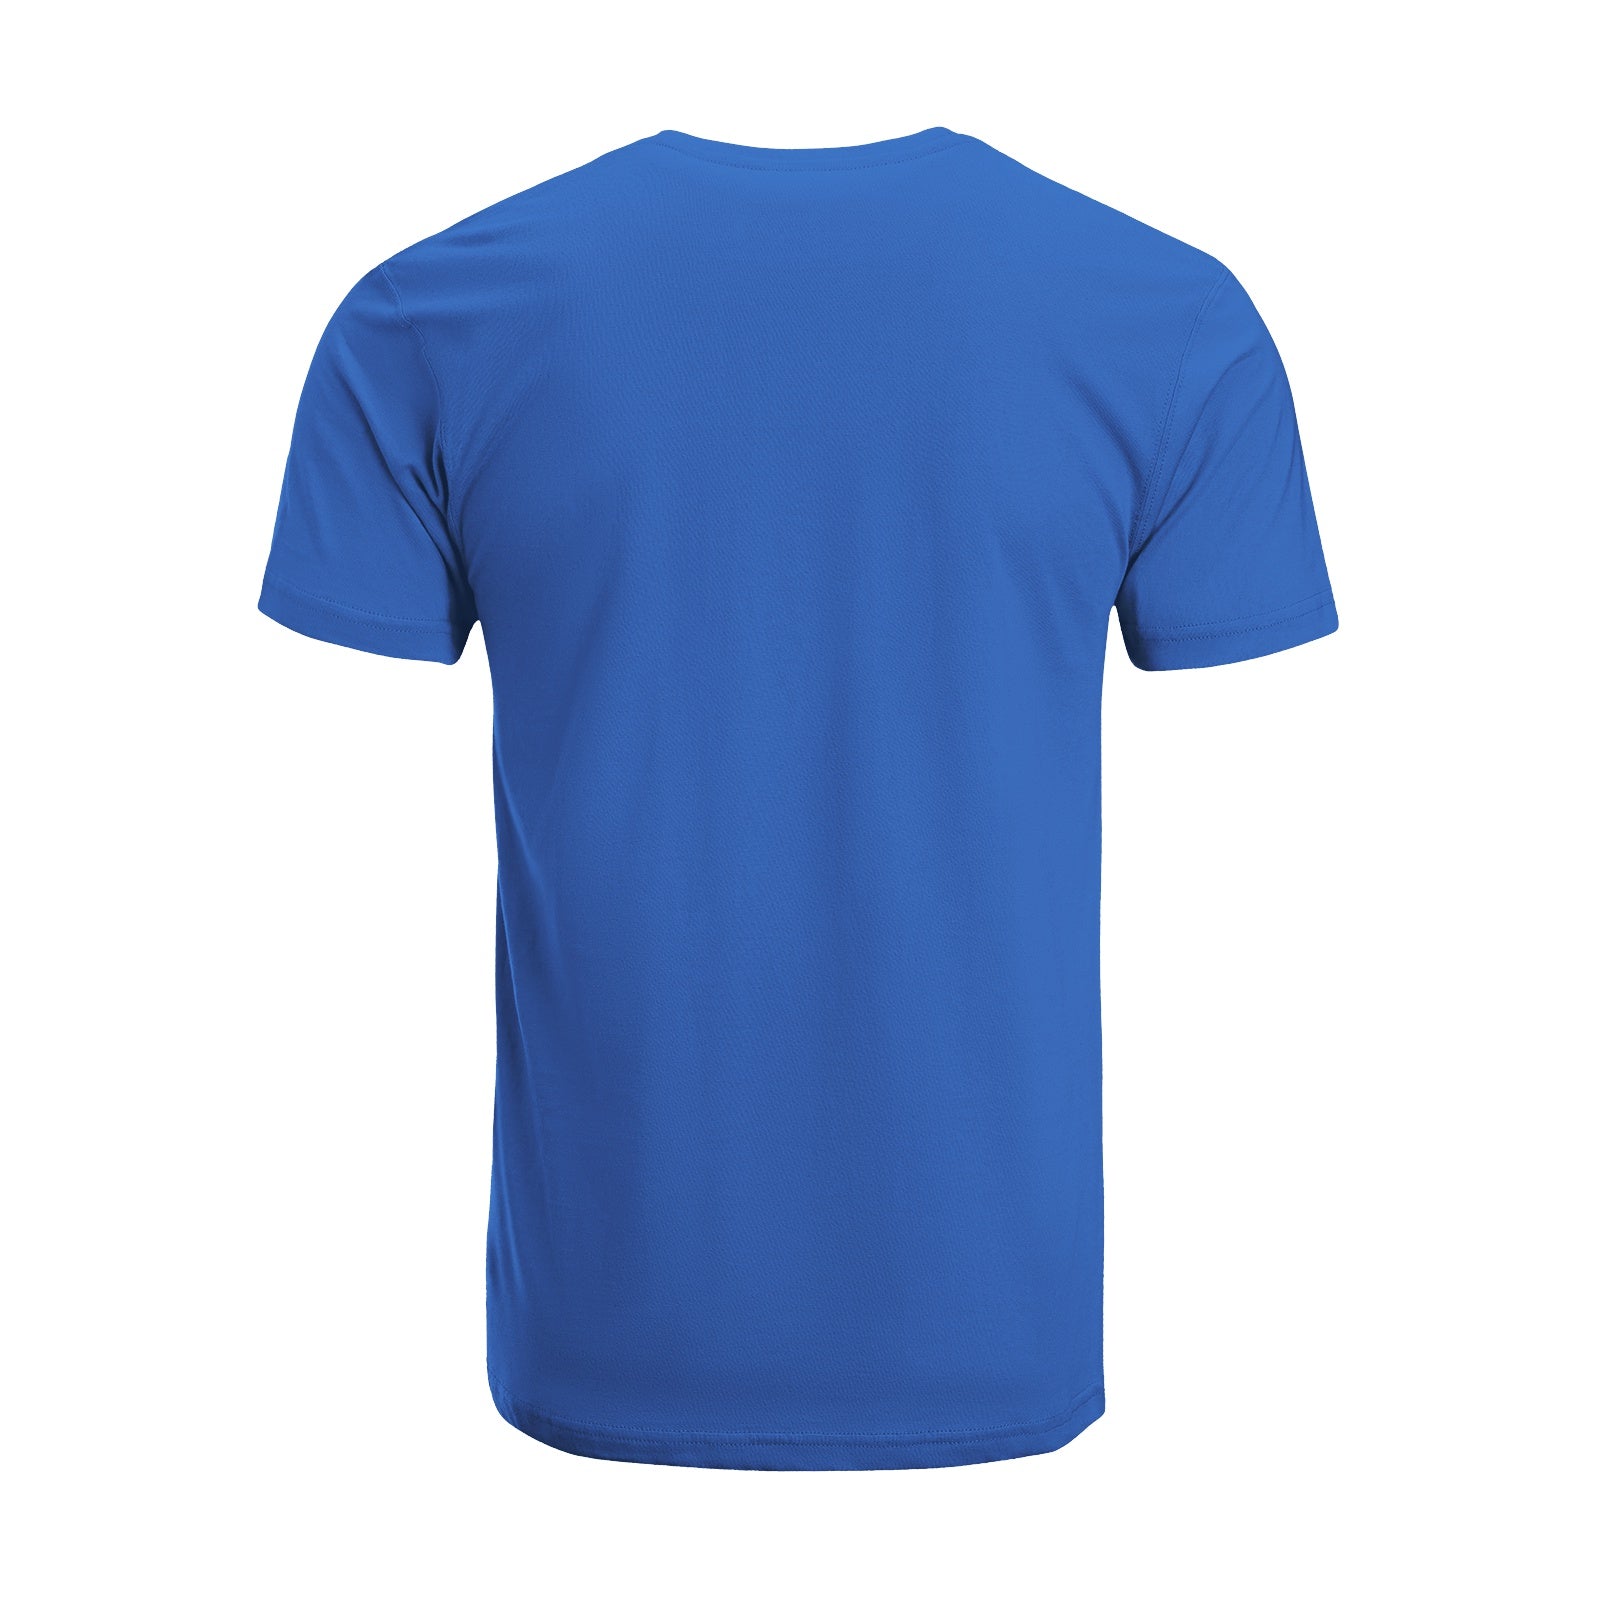 Unisex Short Sleeve Crew Neck Cotton Jersey T-Shirt Gym No. 01 - Tara-Outfits.com